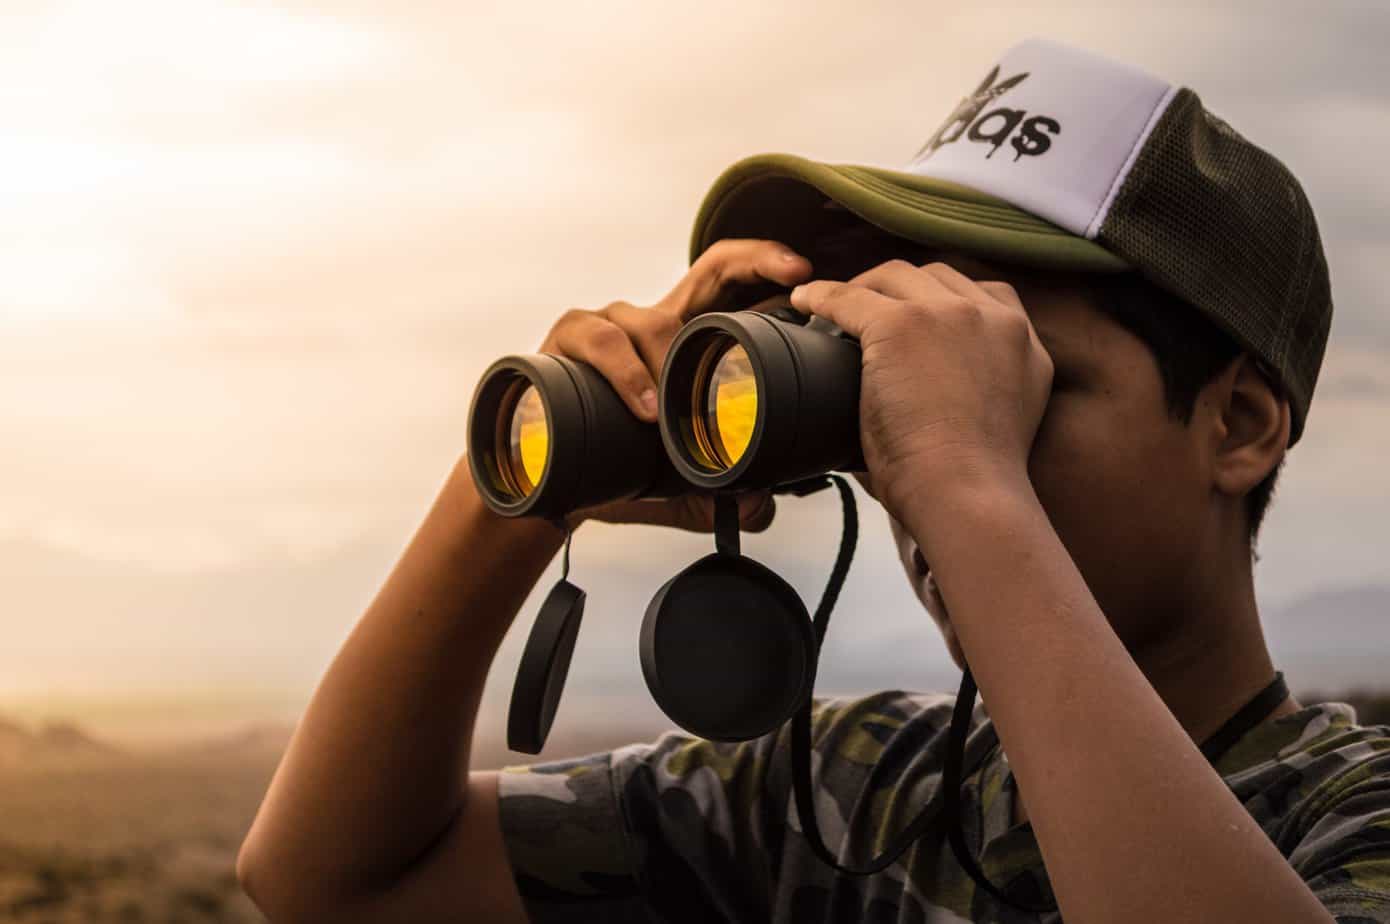 How to choose binoculars well?